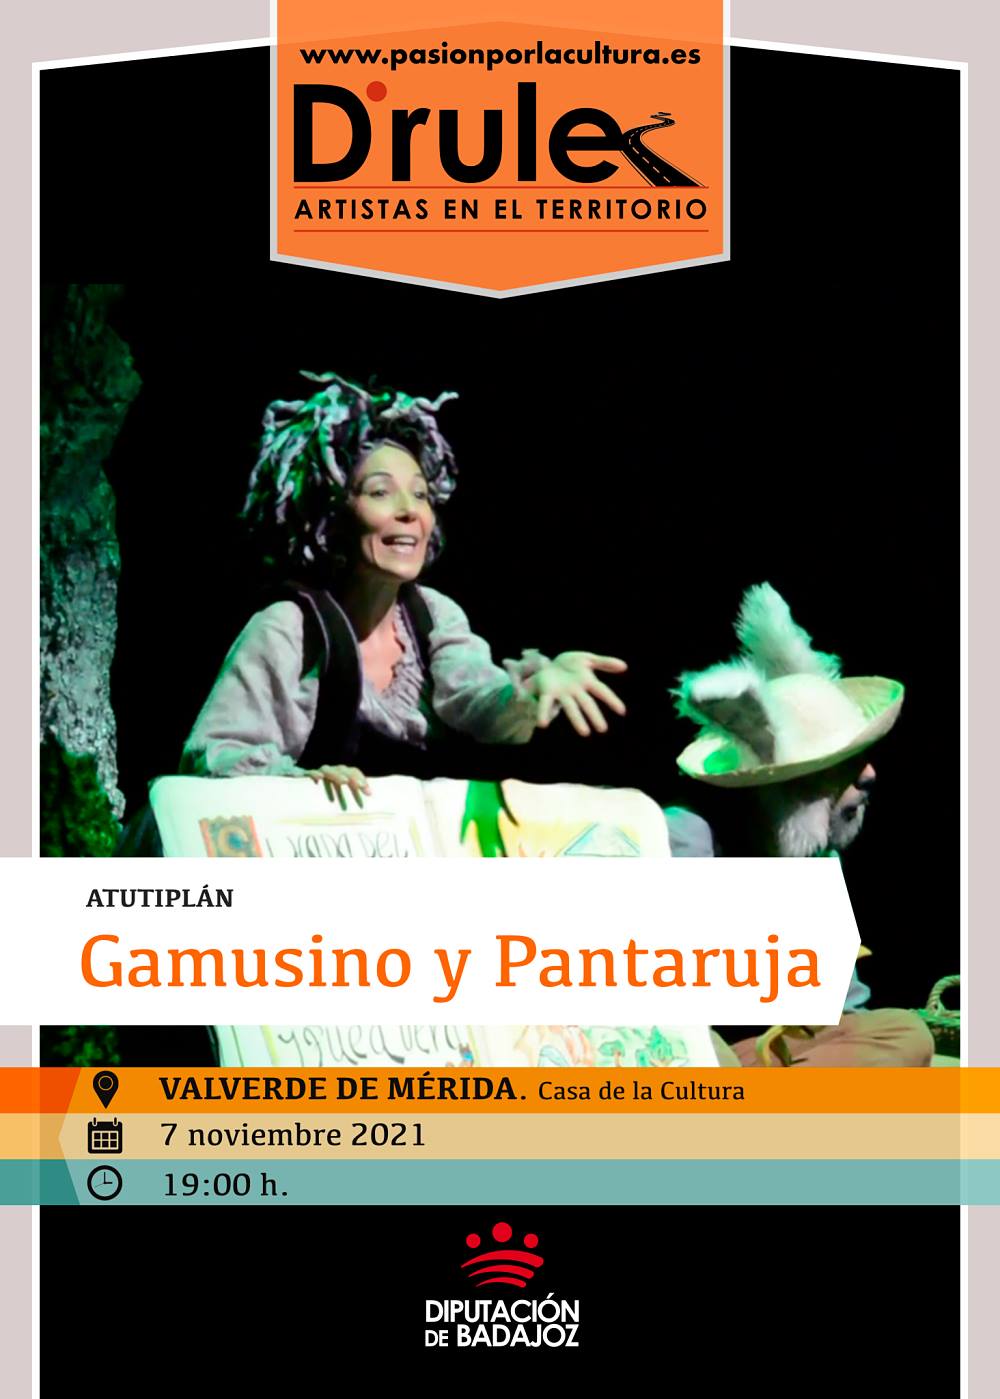 TEATRO | D'Rule 21: «Gamusino y Pantaruja», de Atutiplán